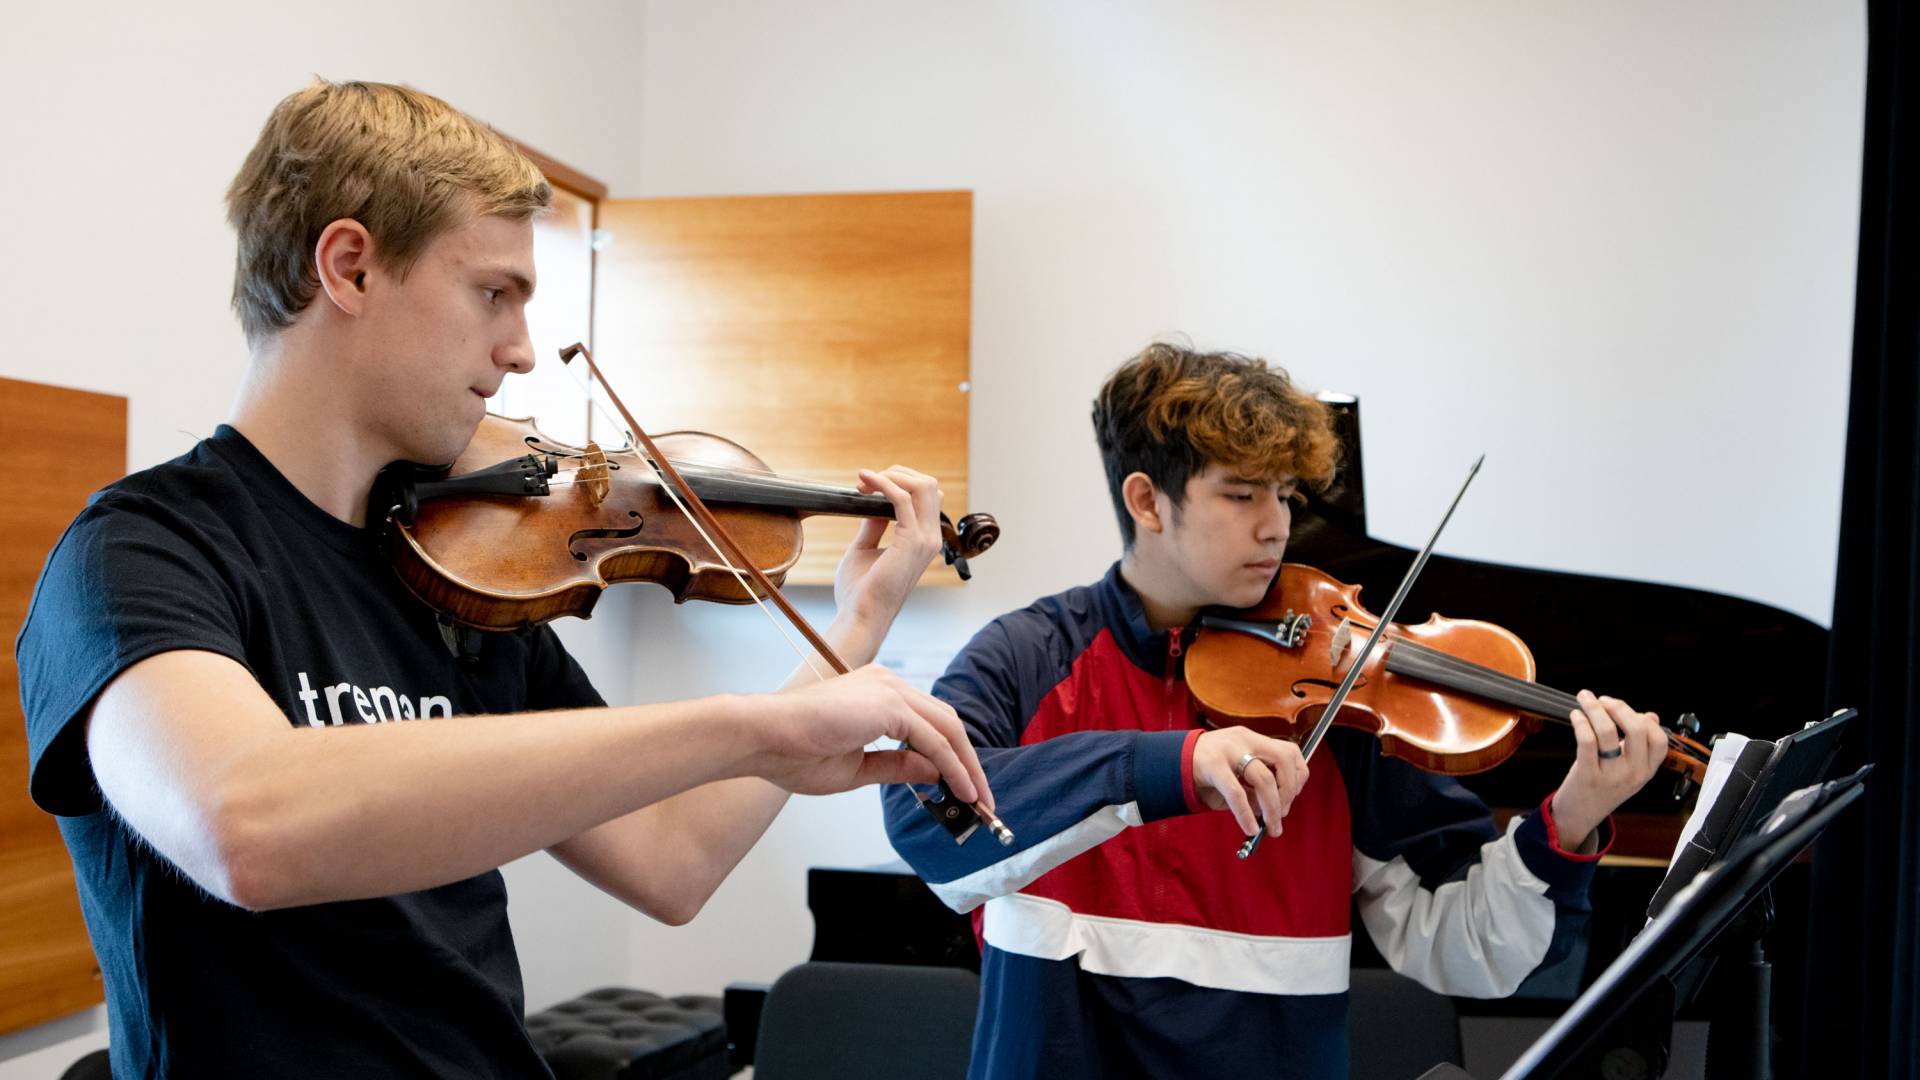 Nick Schmeller ’21 and Trenton student Michael Martinez having a private violin lesson